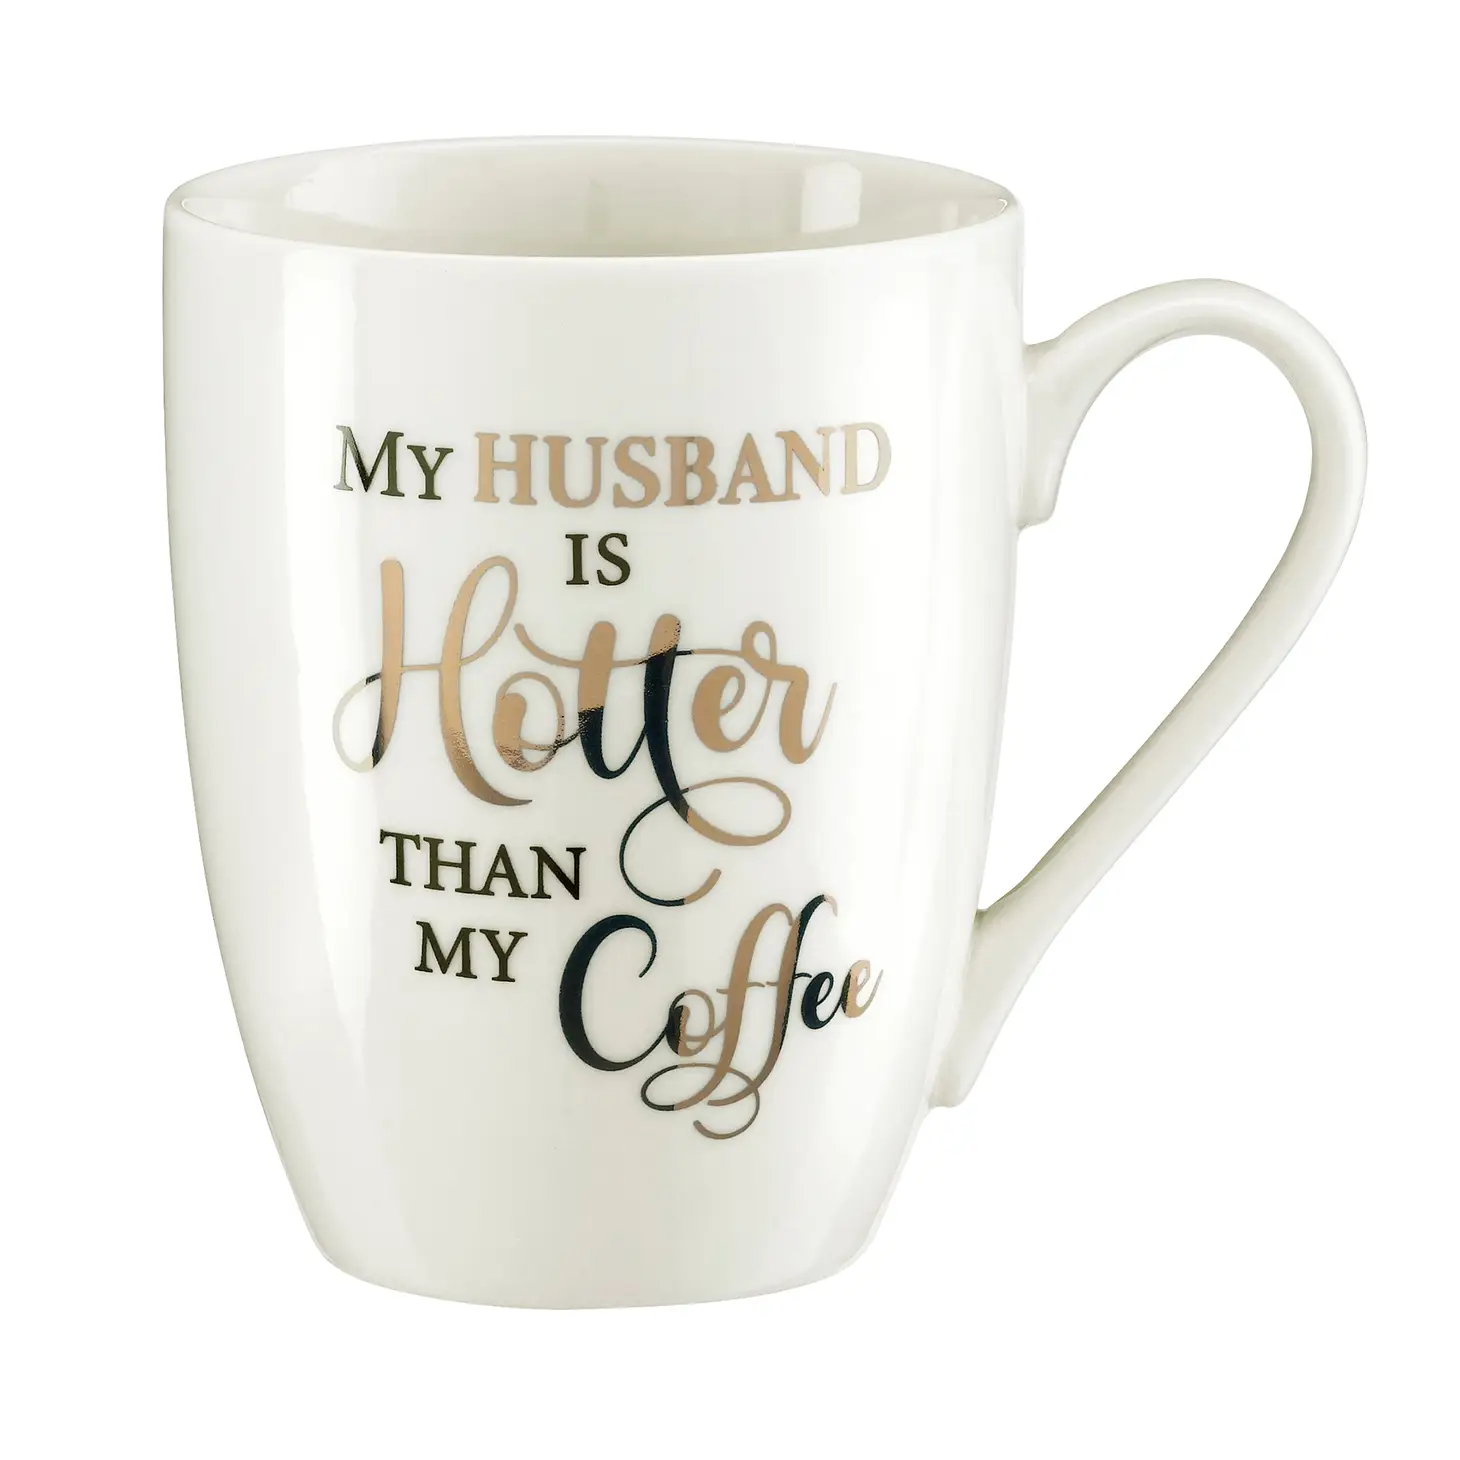 My Husband is Hotter Than My Coffee Mug